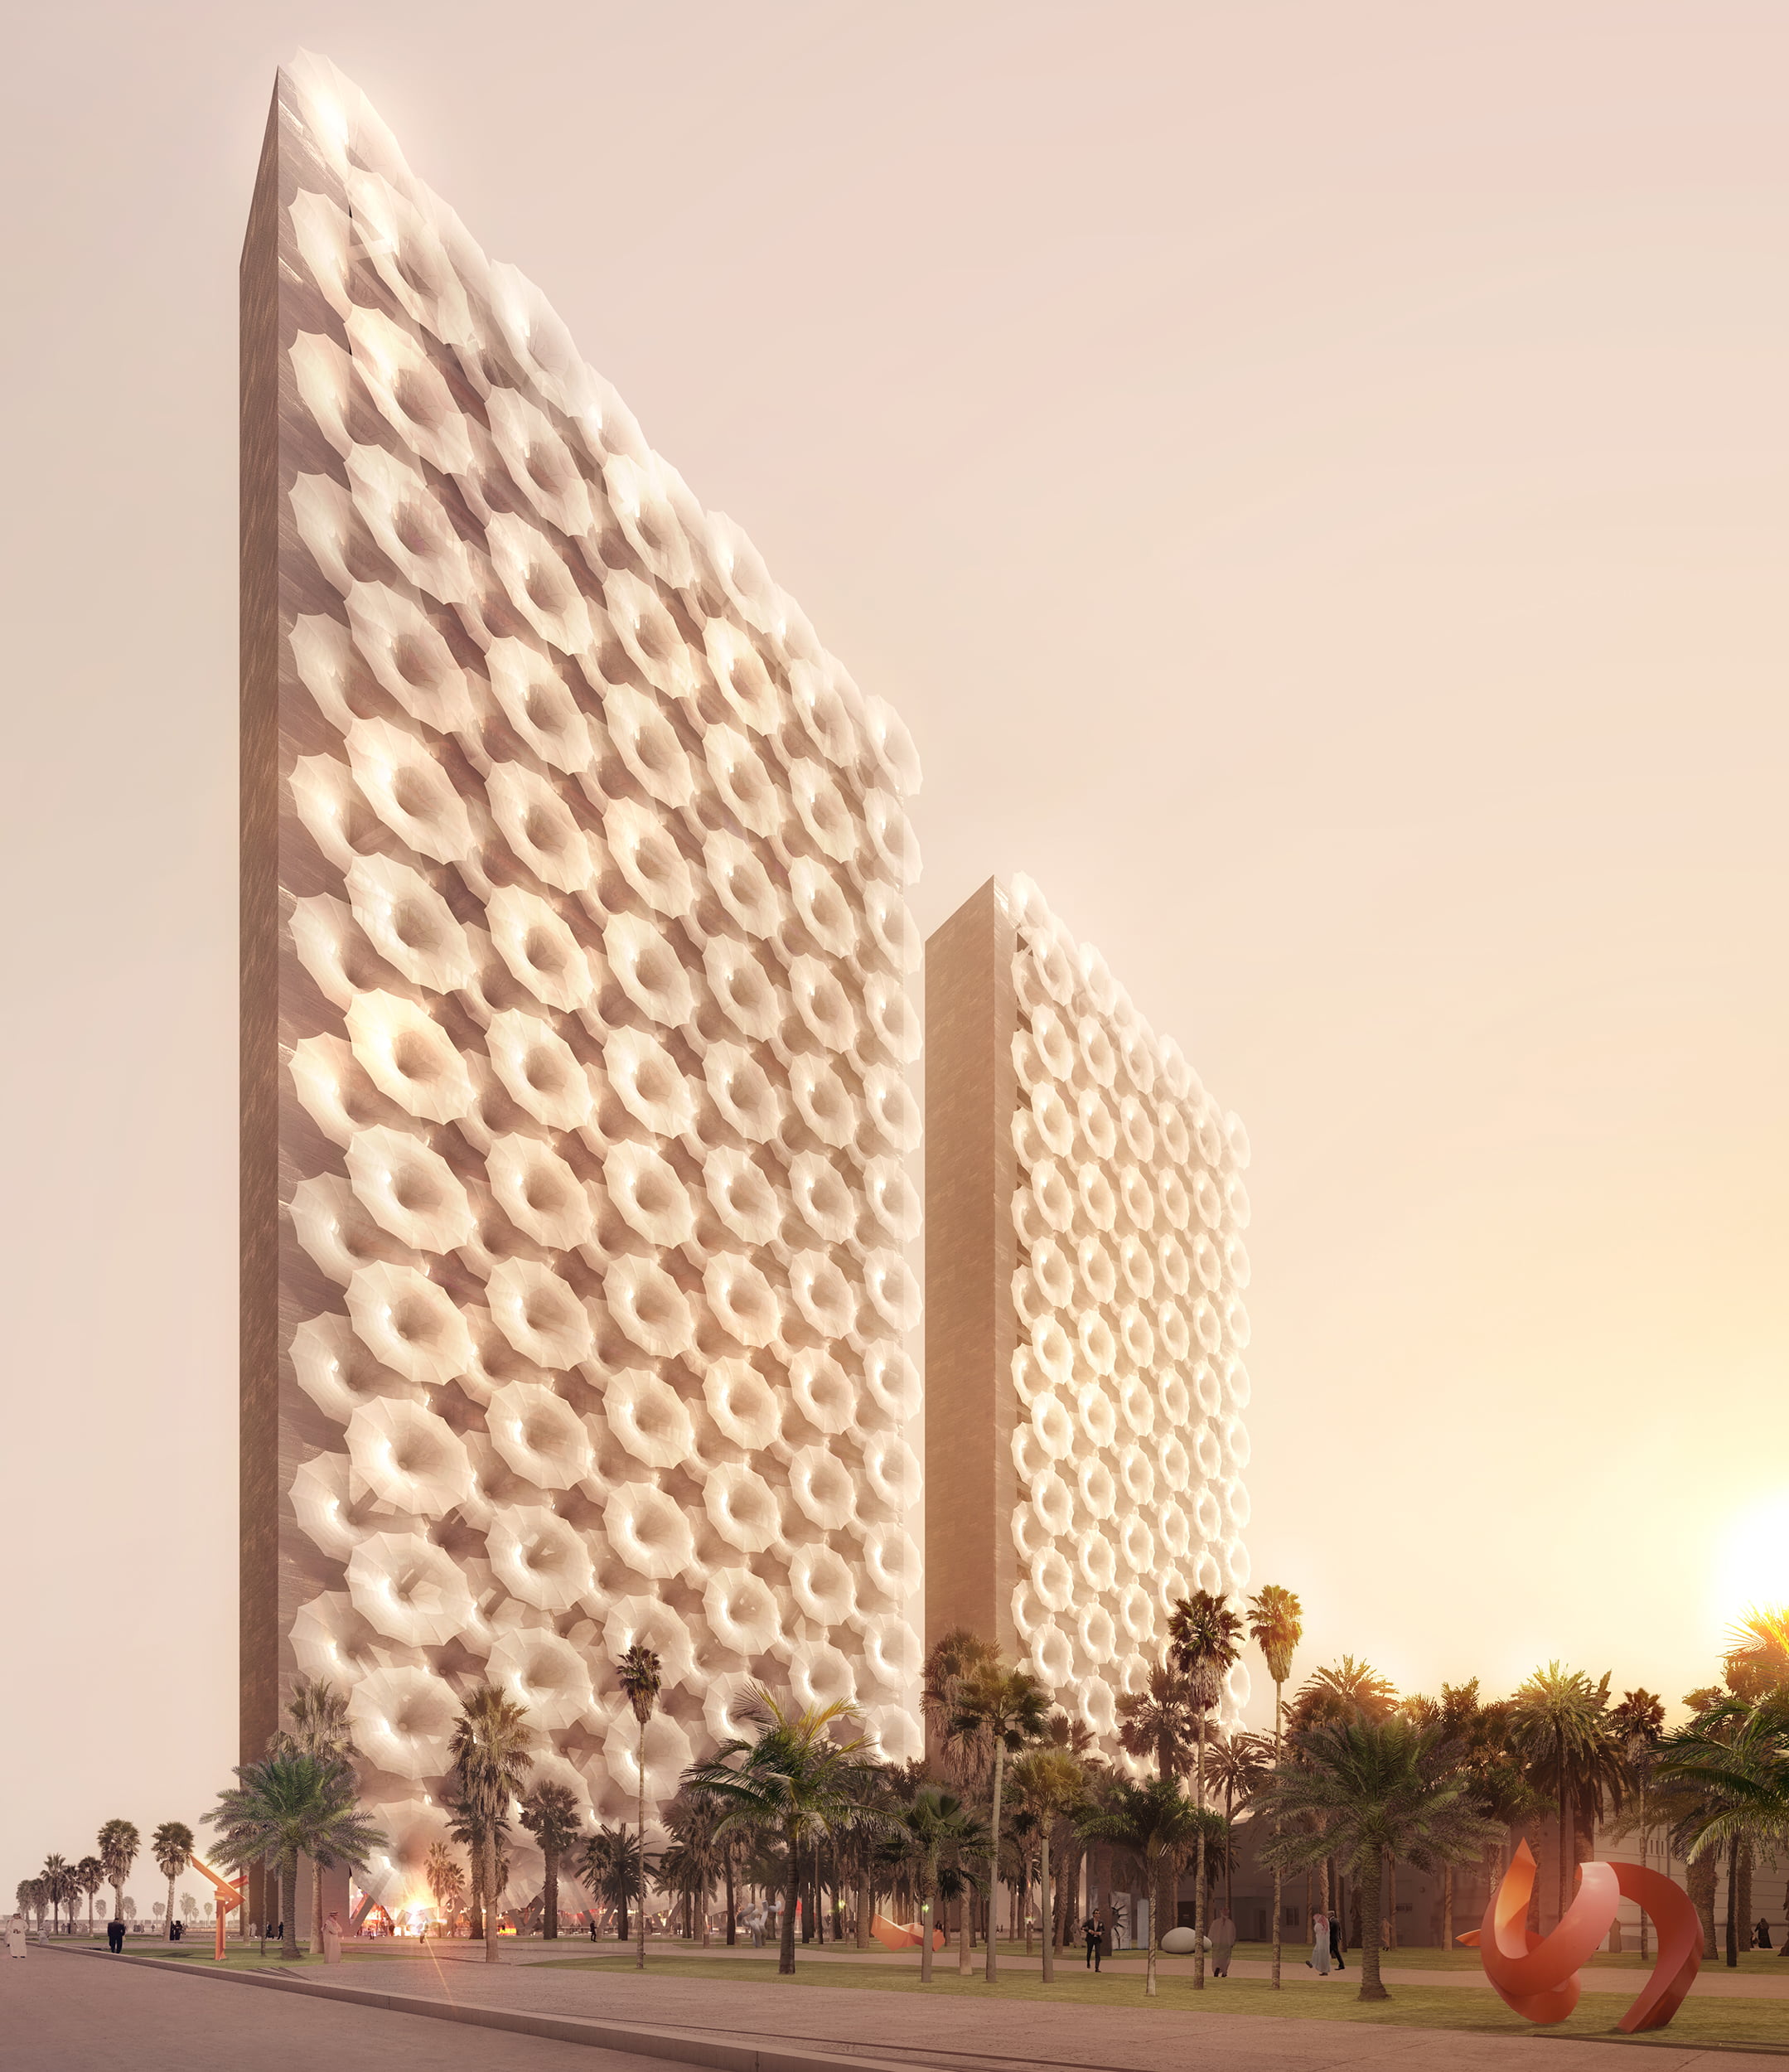 Vizualization of the exterior of Al Jazeera Headquarters Buildings indicating the geometric facade sunshade scheme.